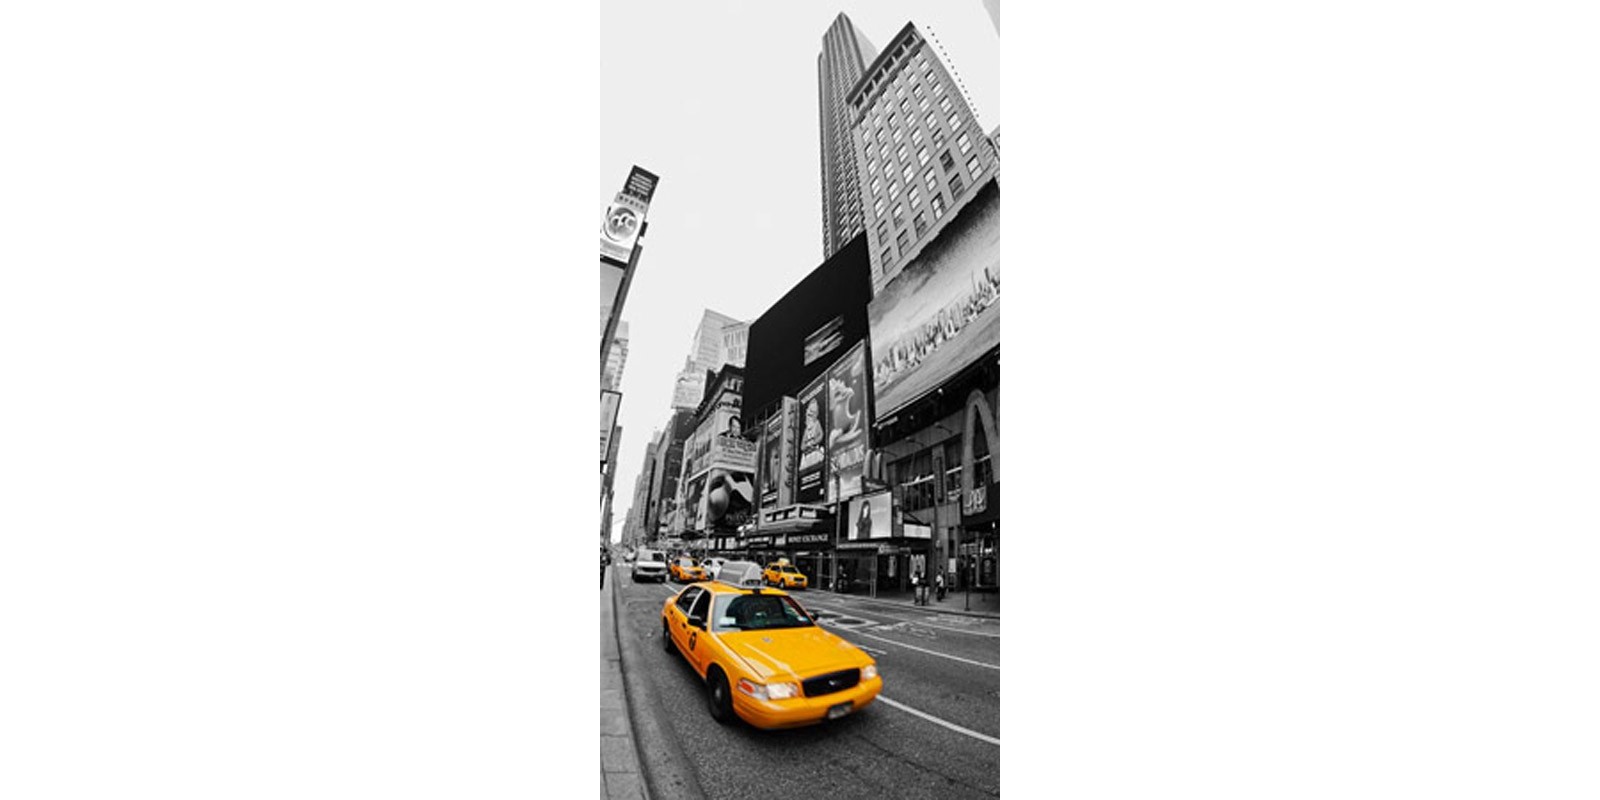 Vadim Ratsenskiy - Taxi in Times Square, NYC